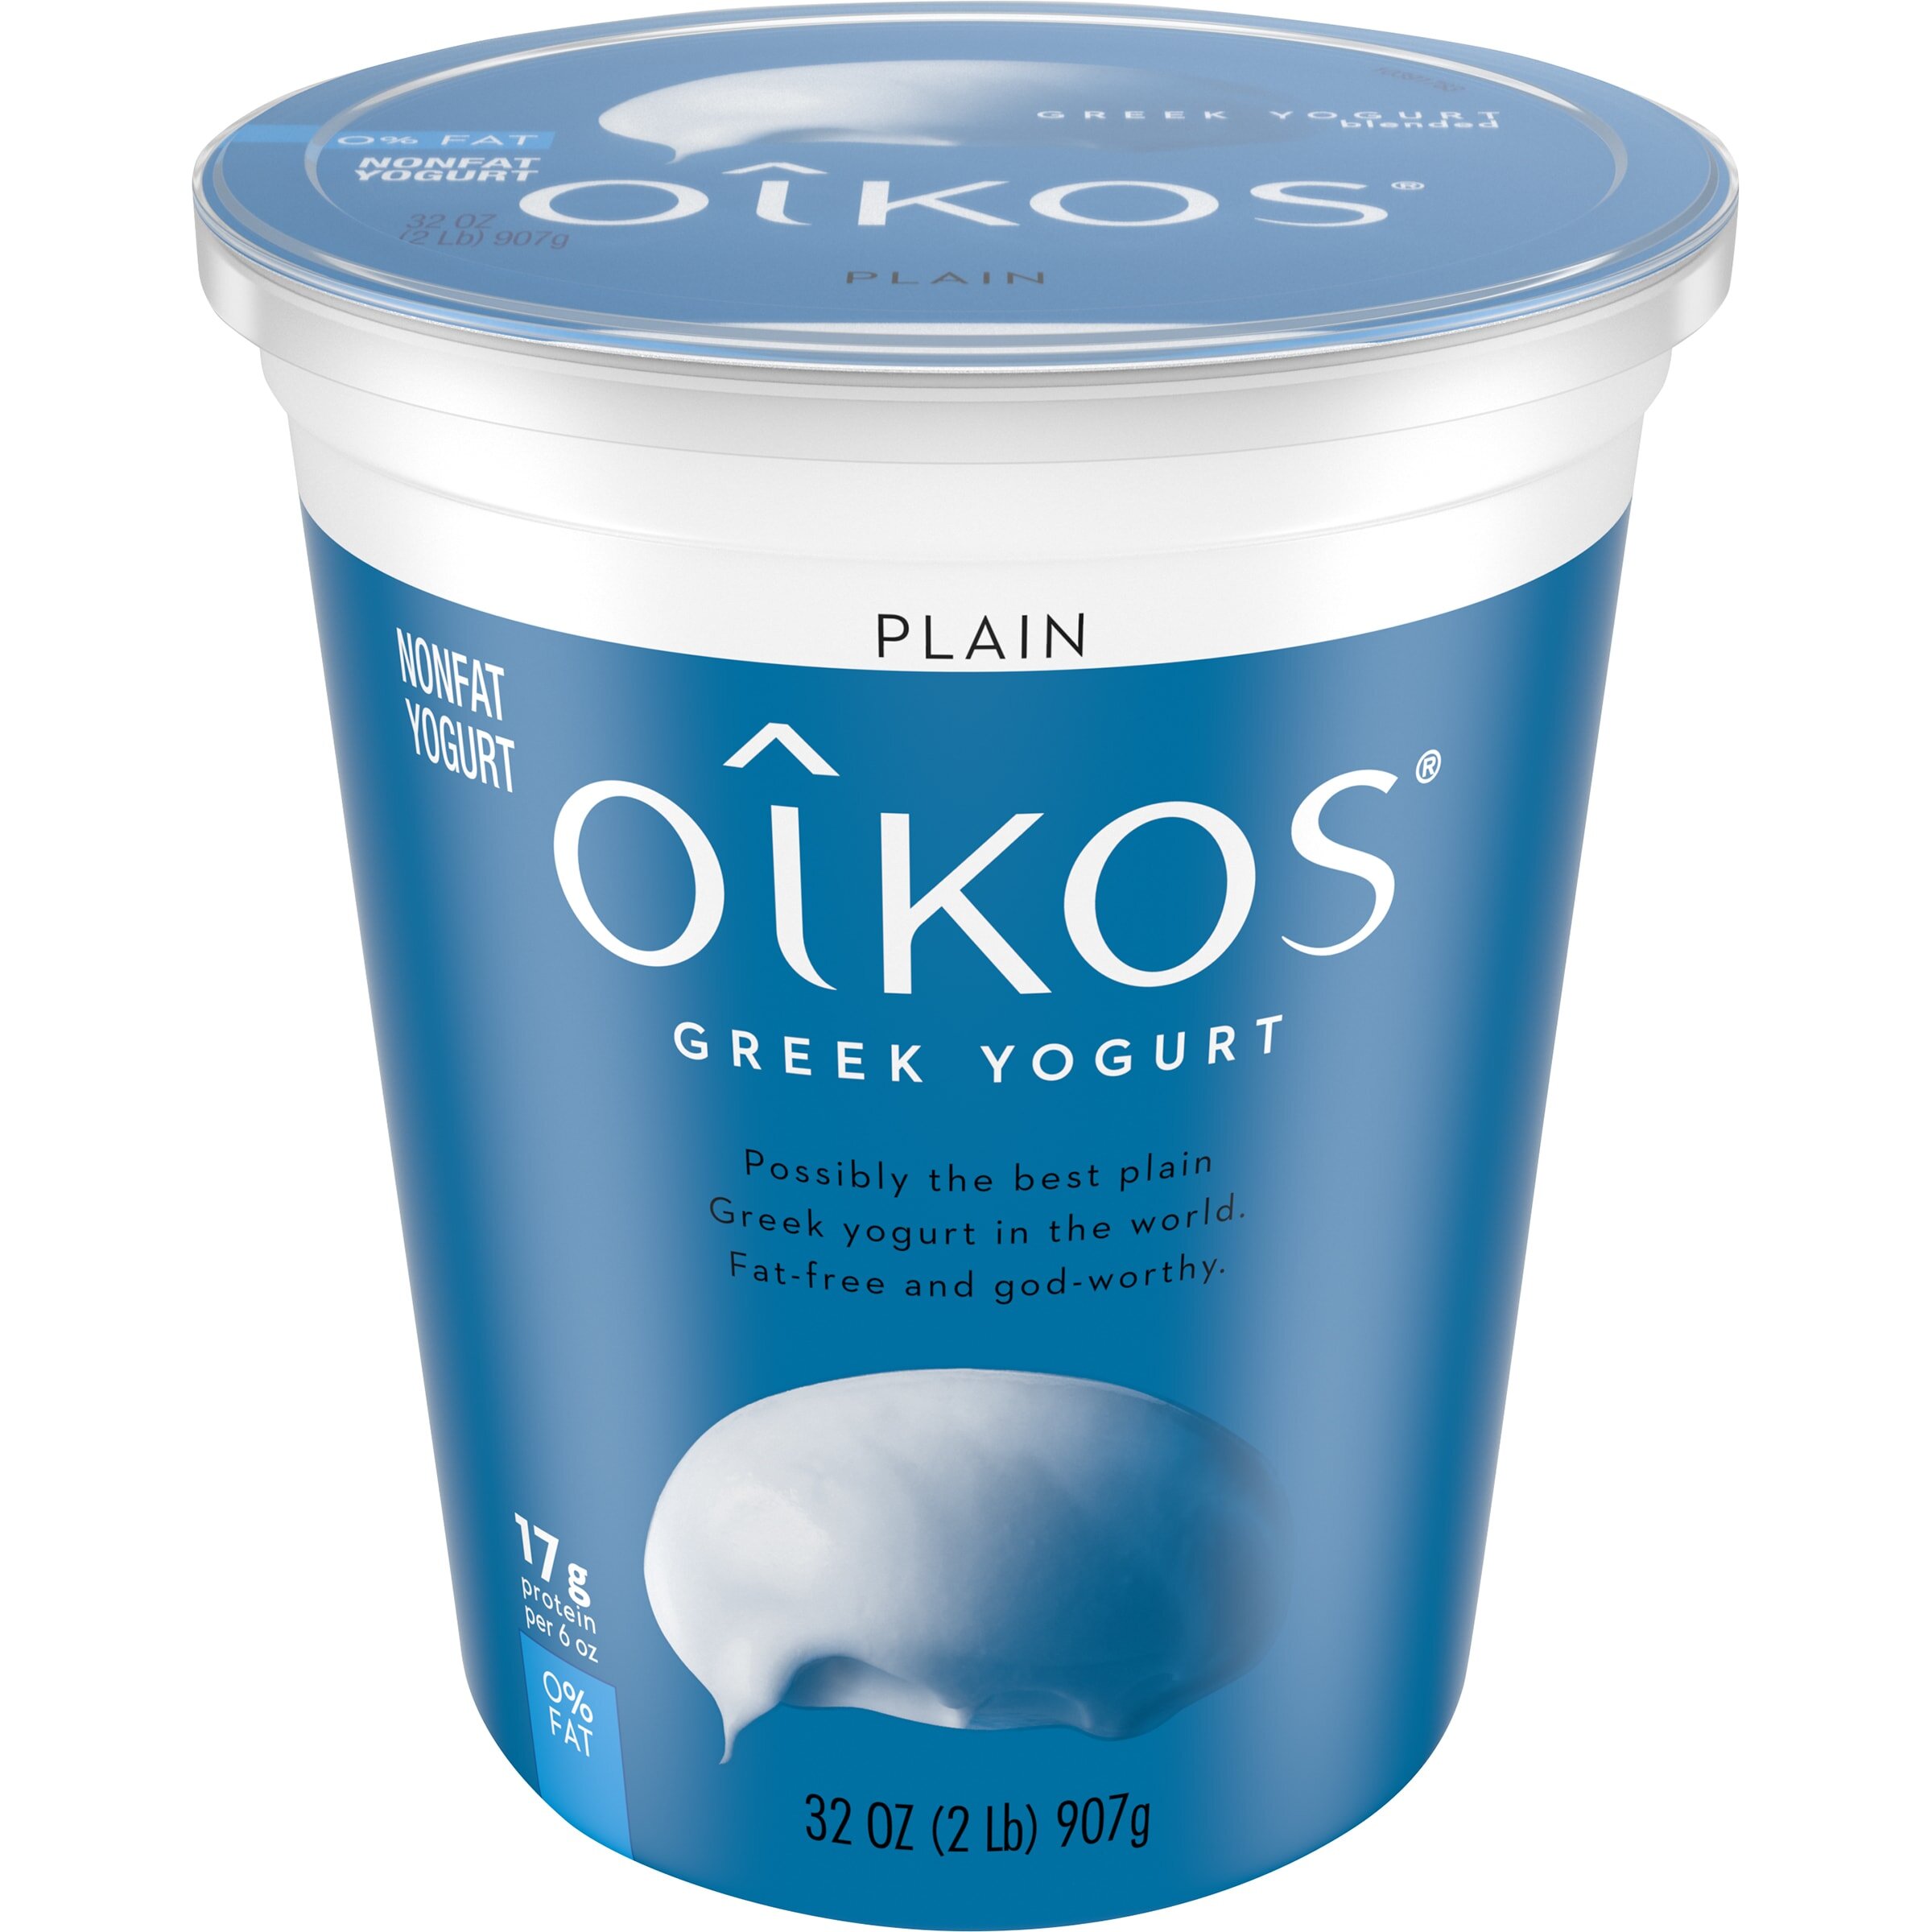 Greek yogurt. Oikos йогурт. Греческий йогурт. Греческий йогурт Данон. Greek Yogurt Plain.